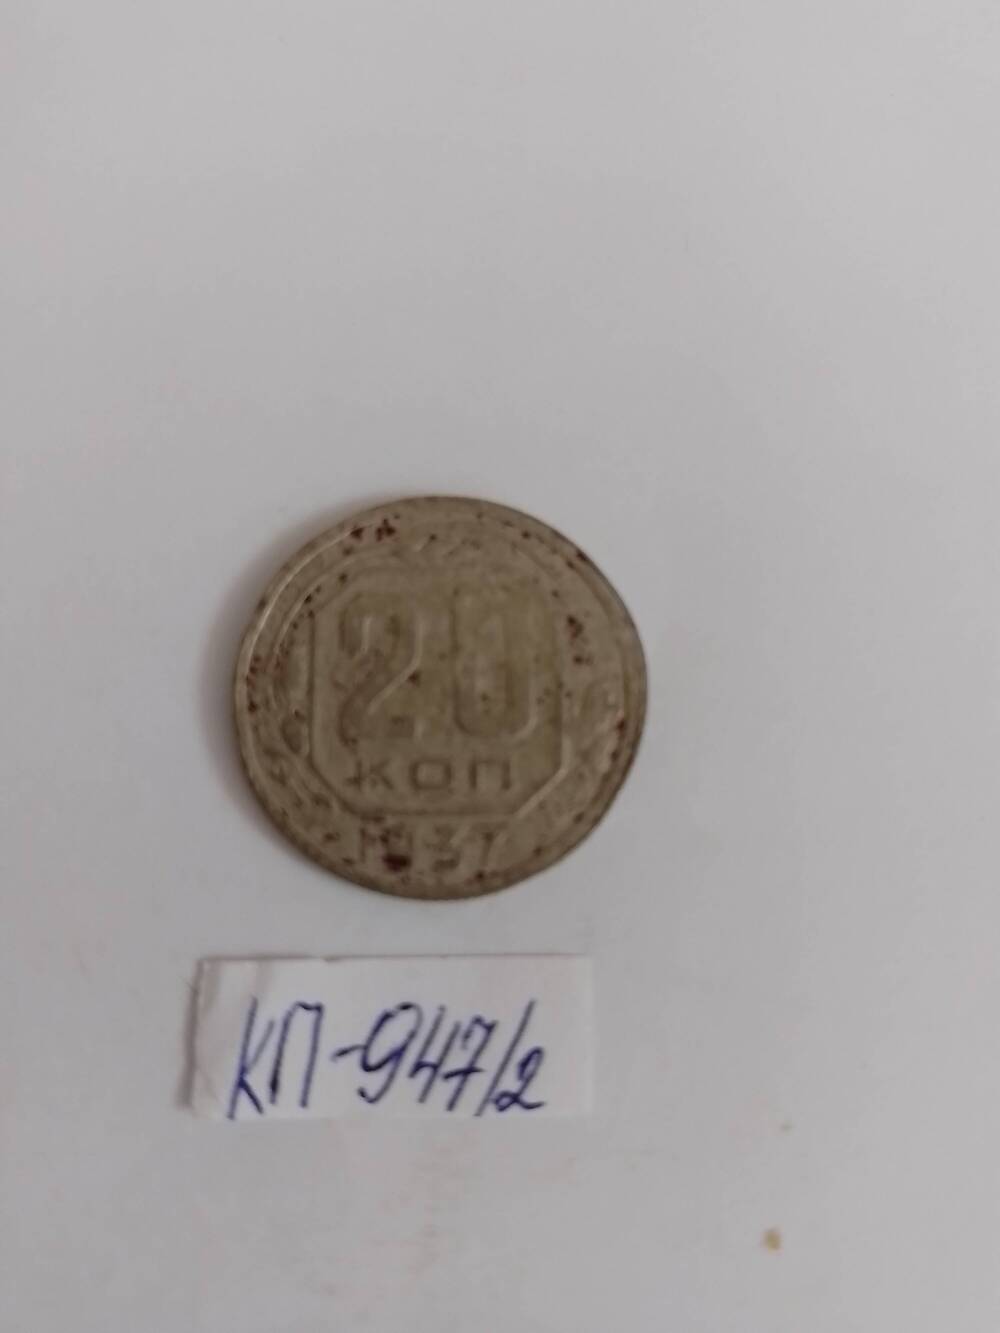 Монета 20 копеек 1937 года